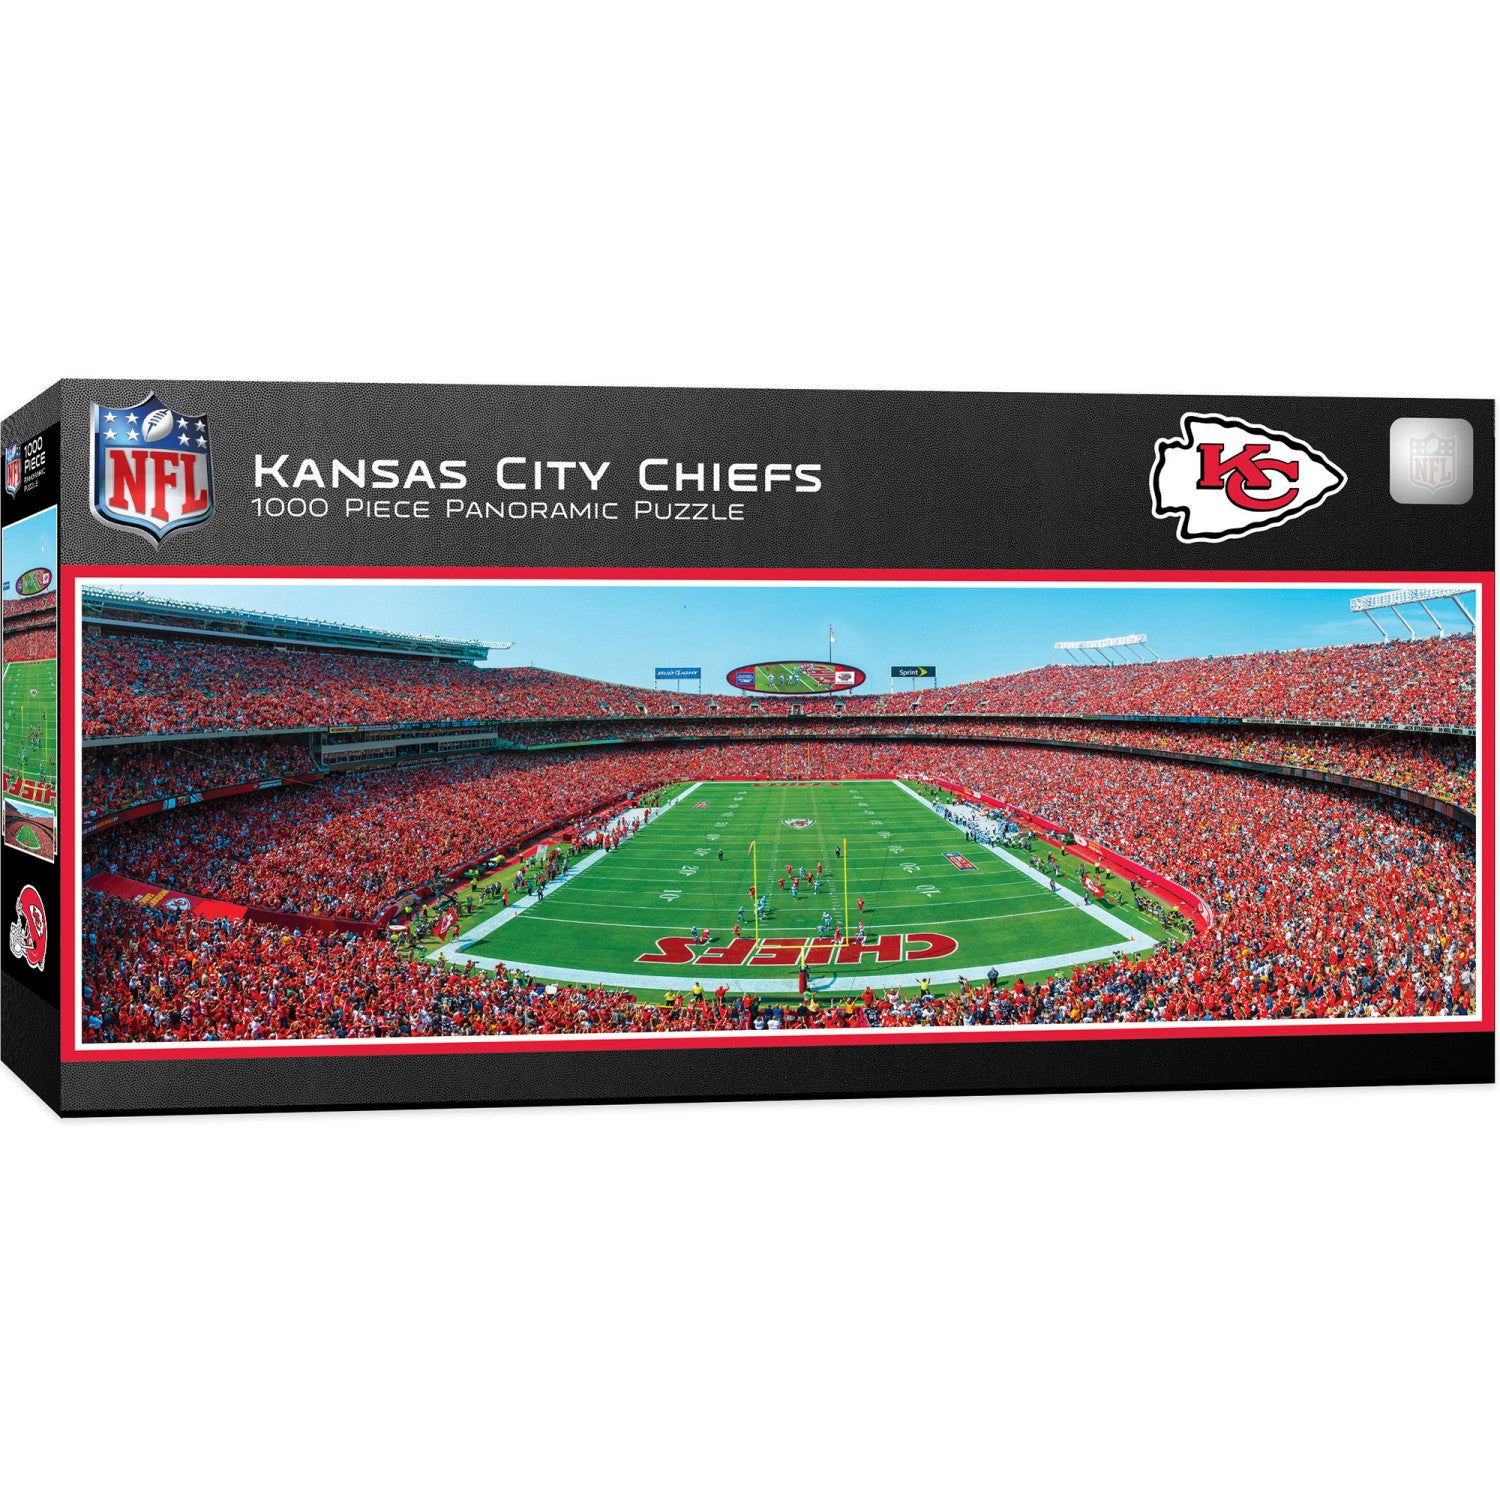 Kansas City Chiefs - 1000 Piece Panoramic Puzzle - End View